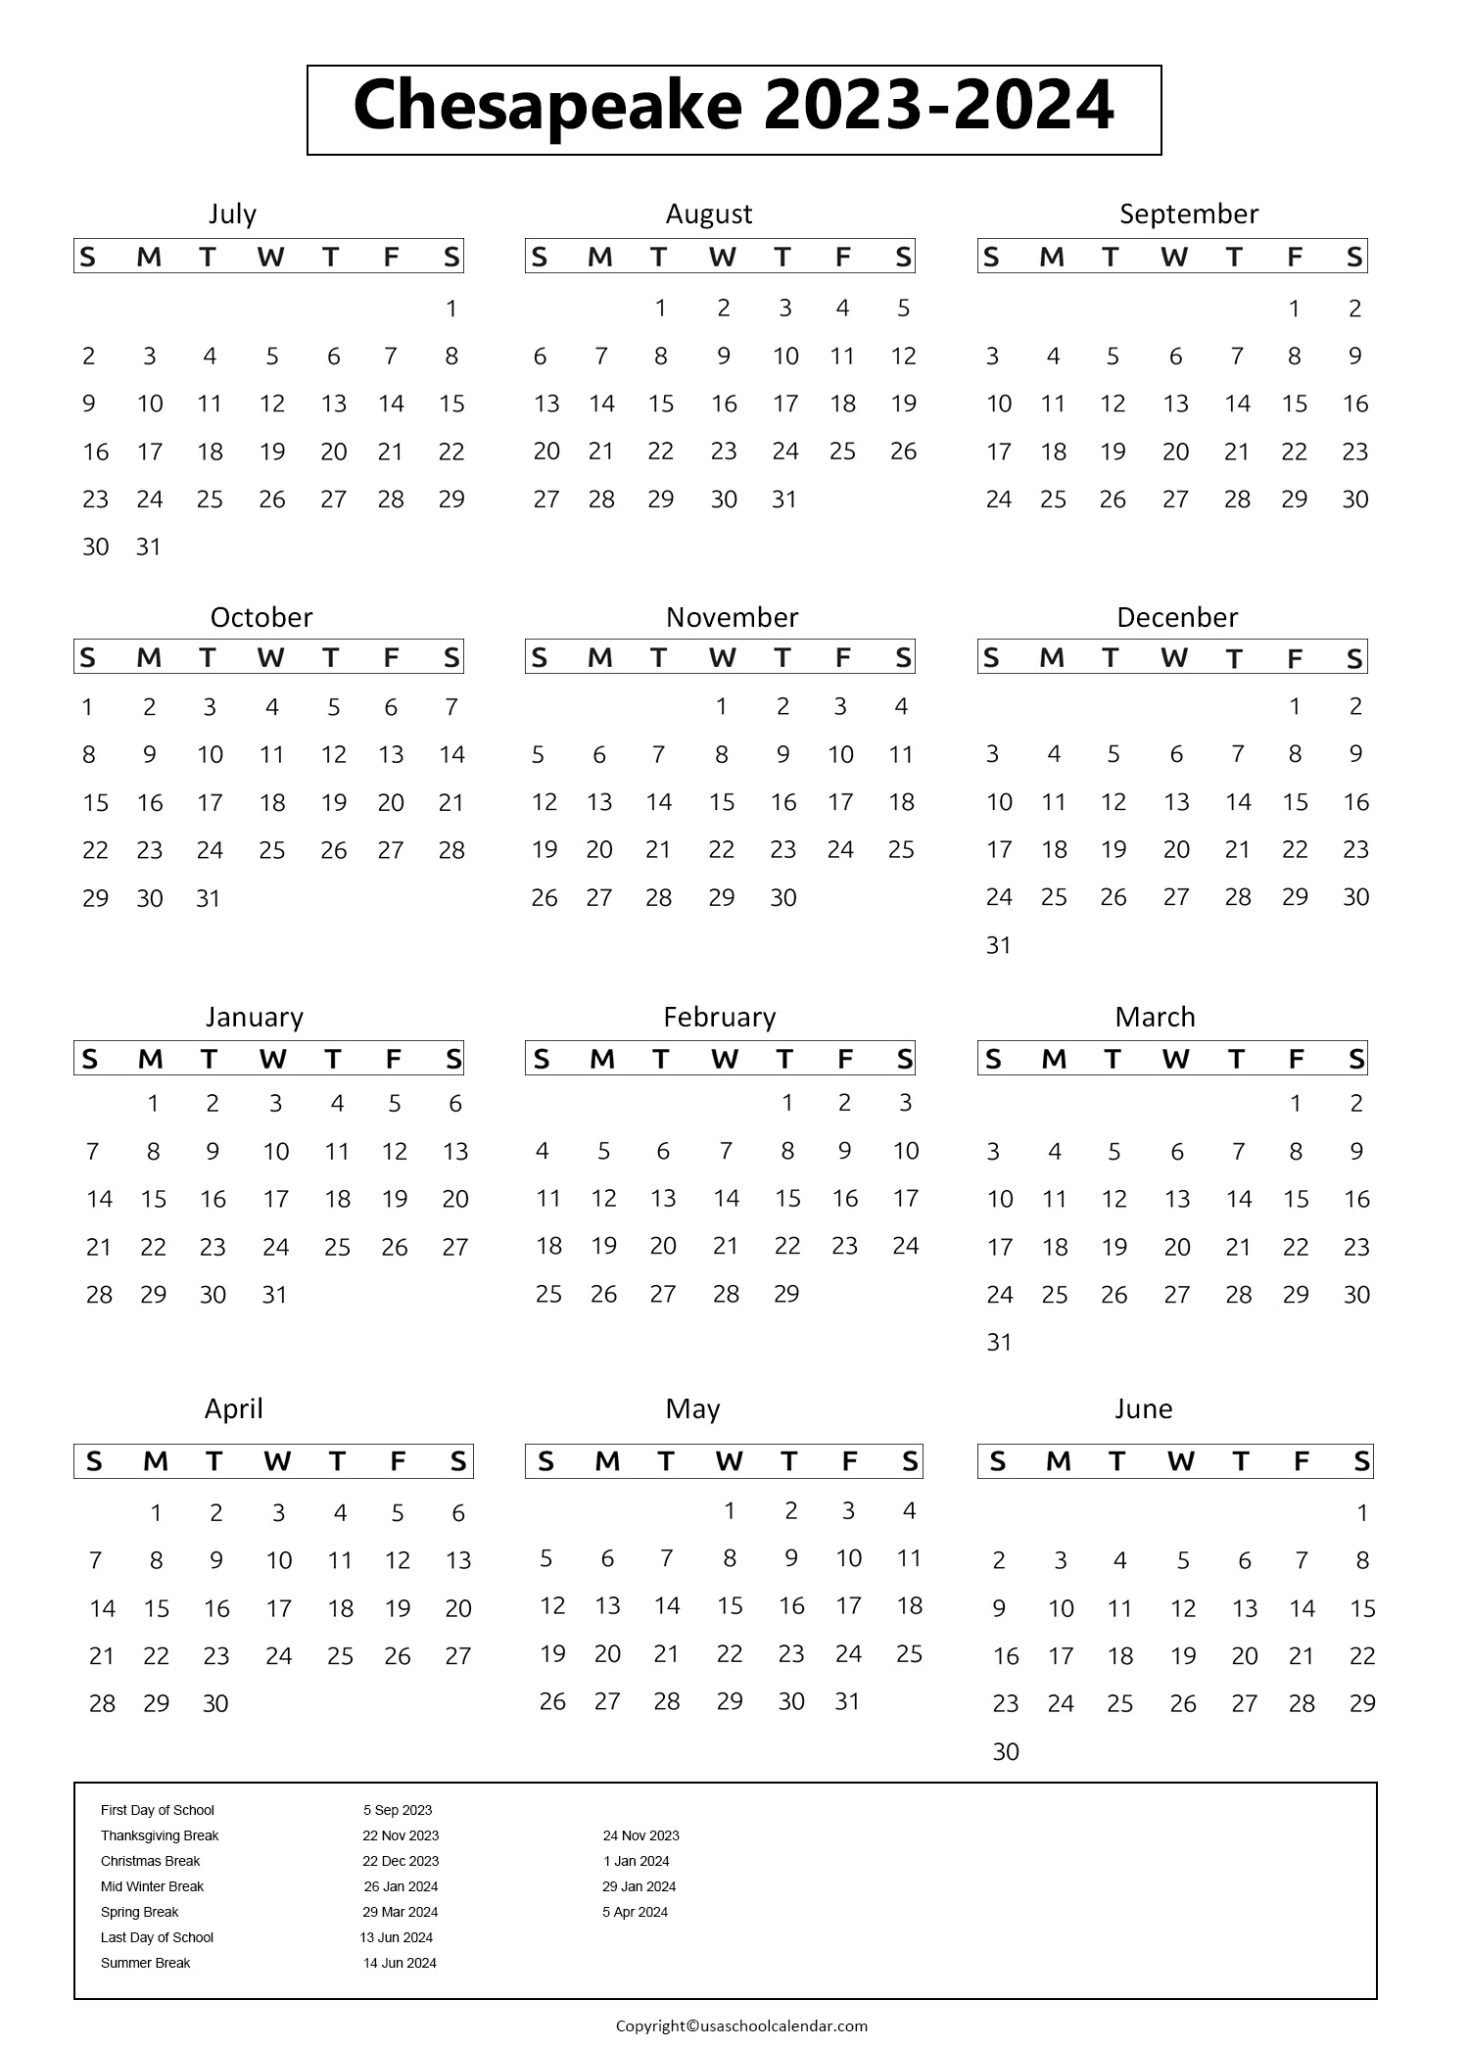 Chesapeake Public Schools Calendar & Holidays 2023-2024